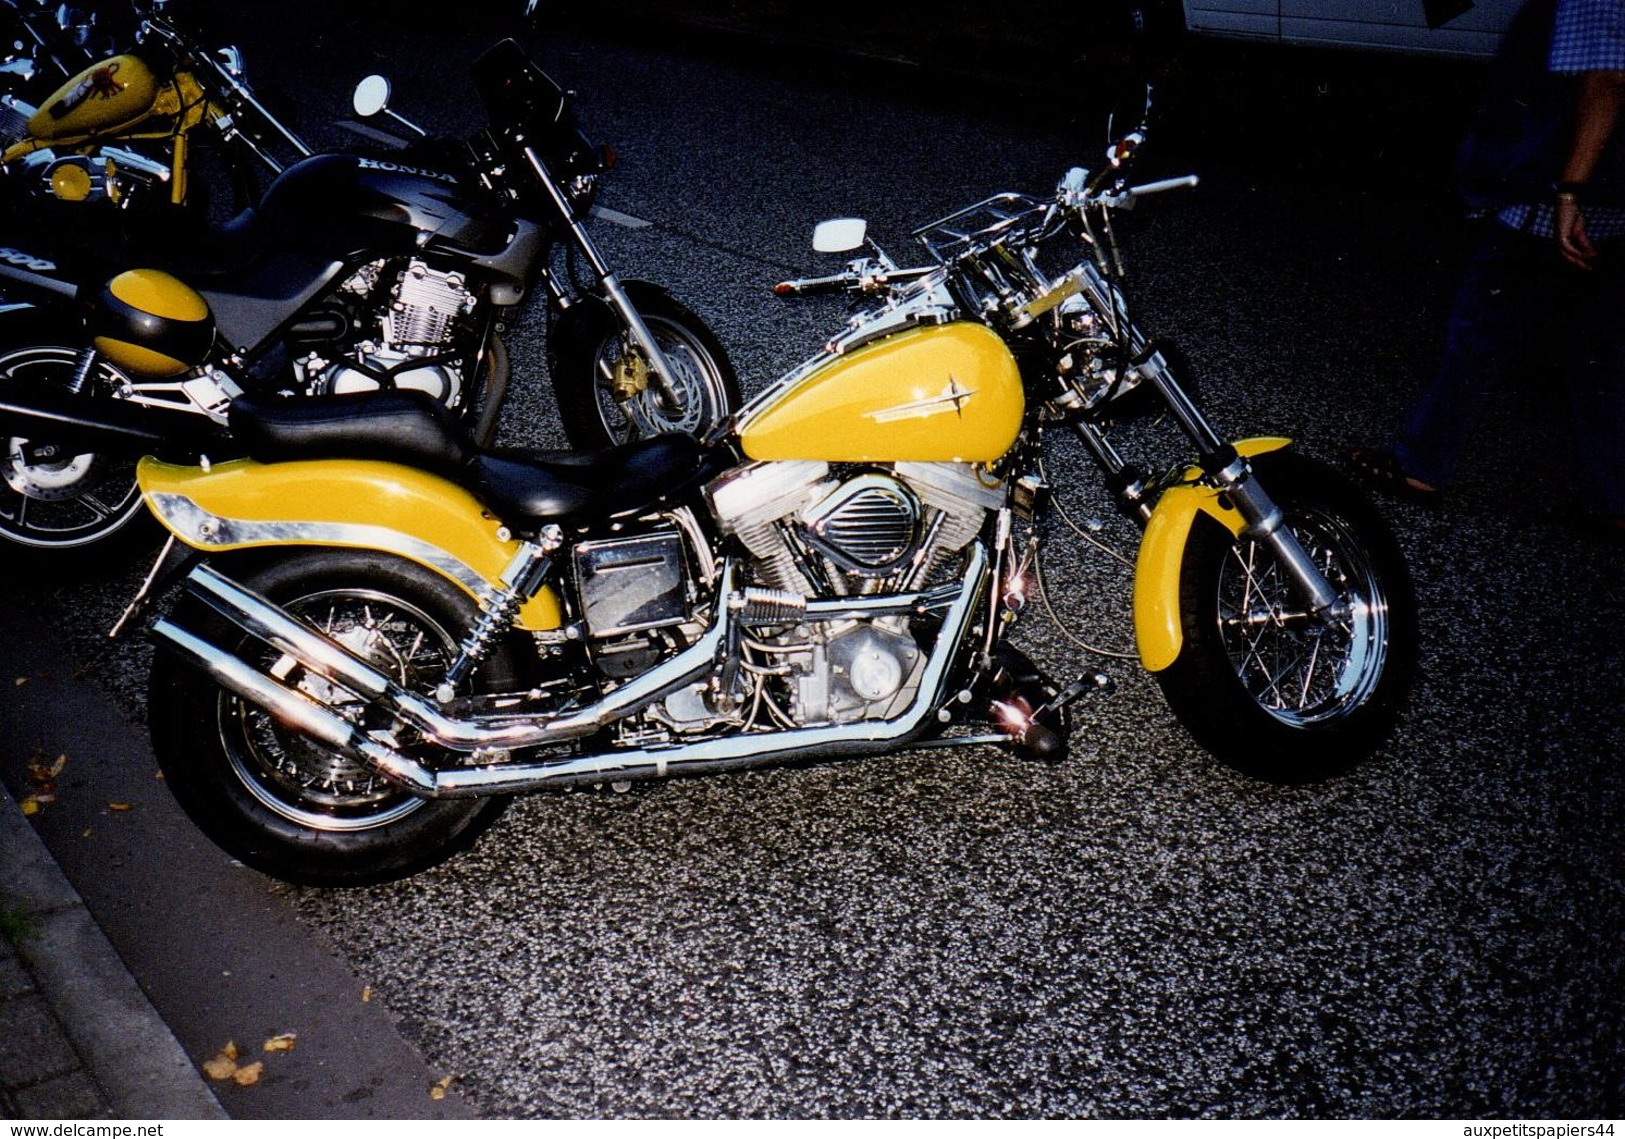 8 Photos Originales Motocyclisme - Moto Harley-Davidson - Motard - Motocyclettes de Grosses cylindrées - Lot 1/14